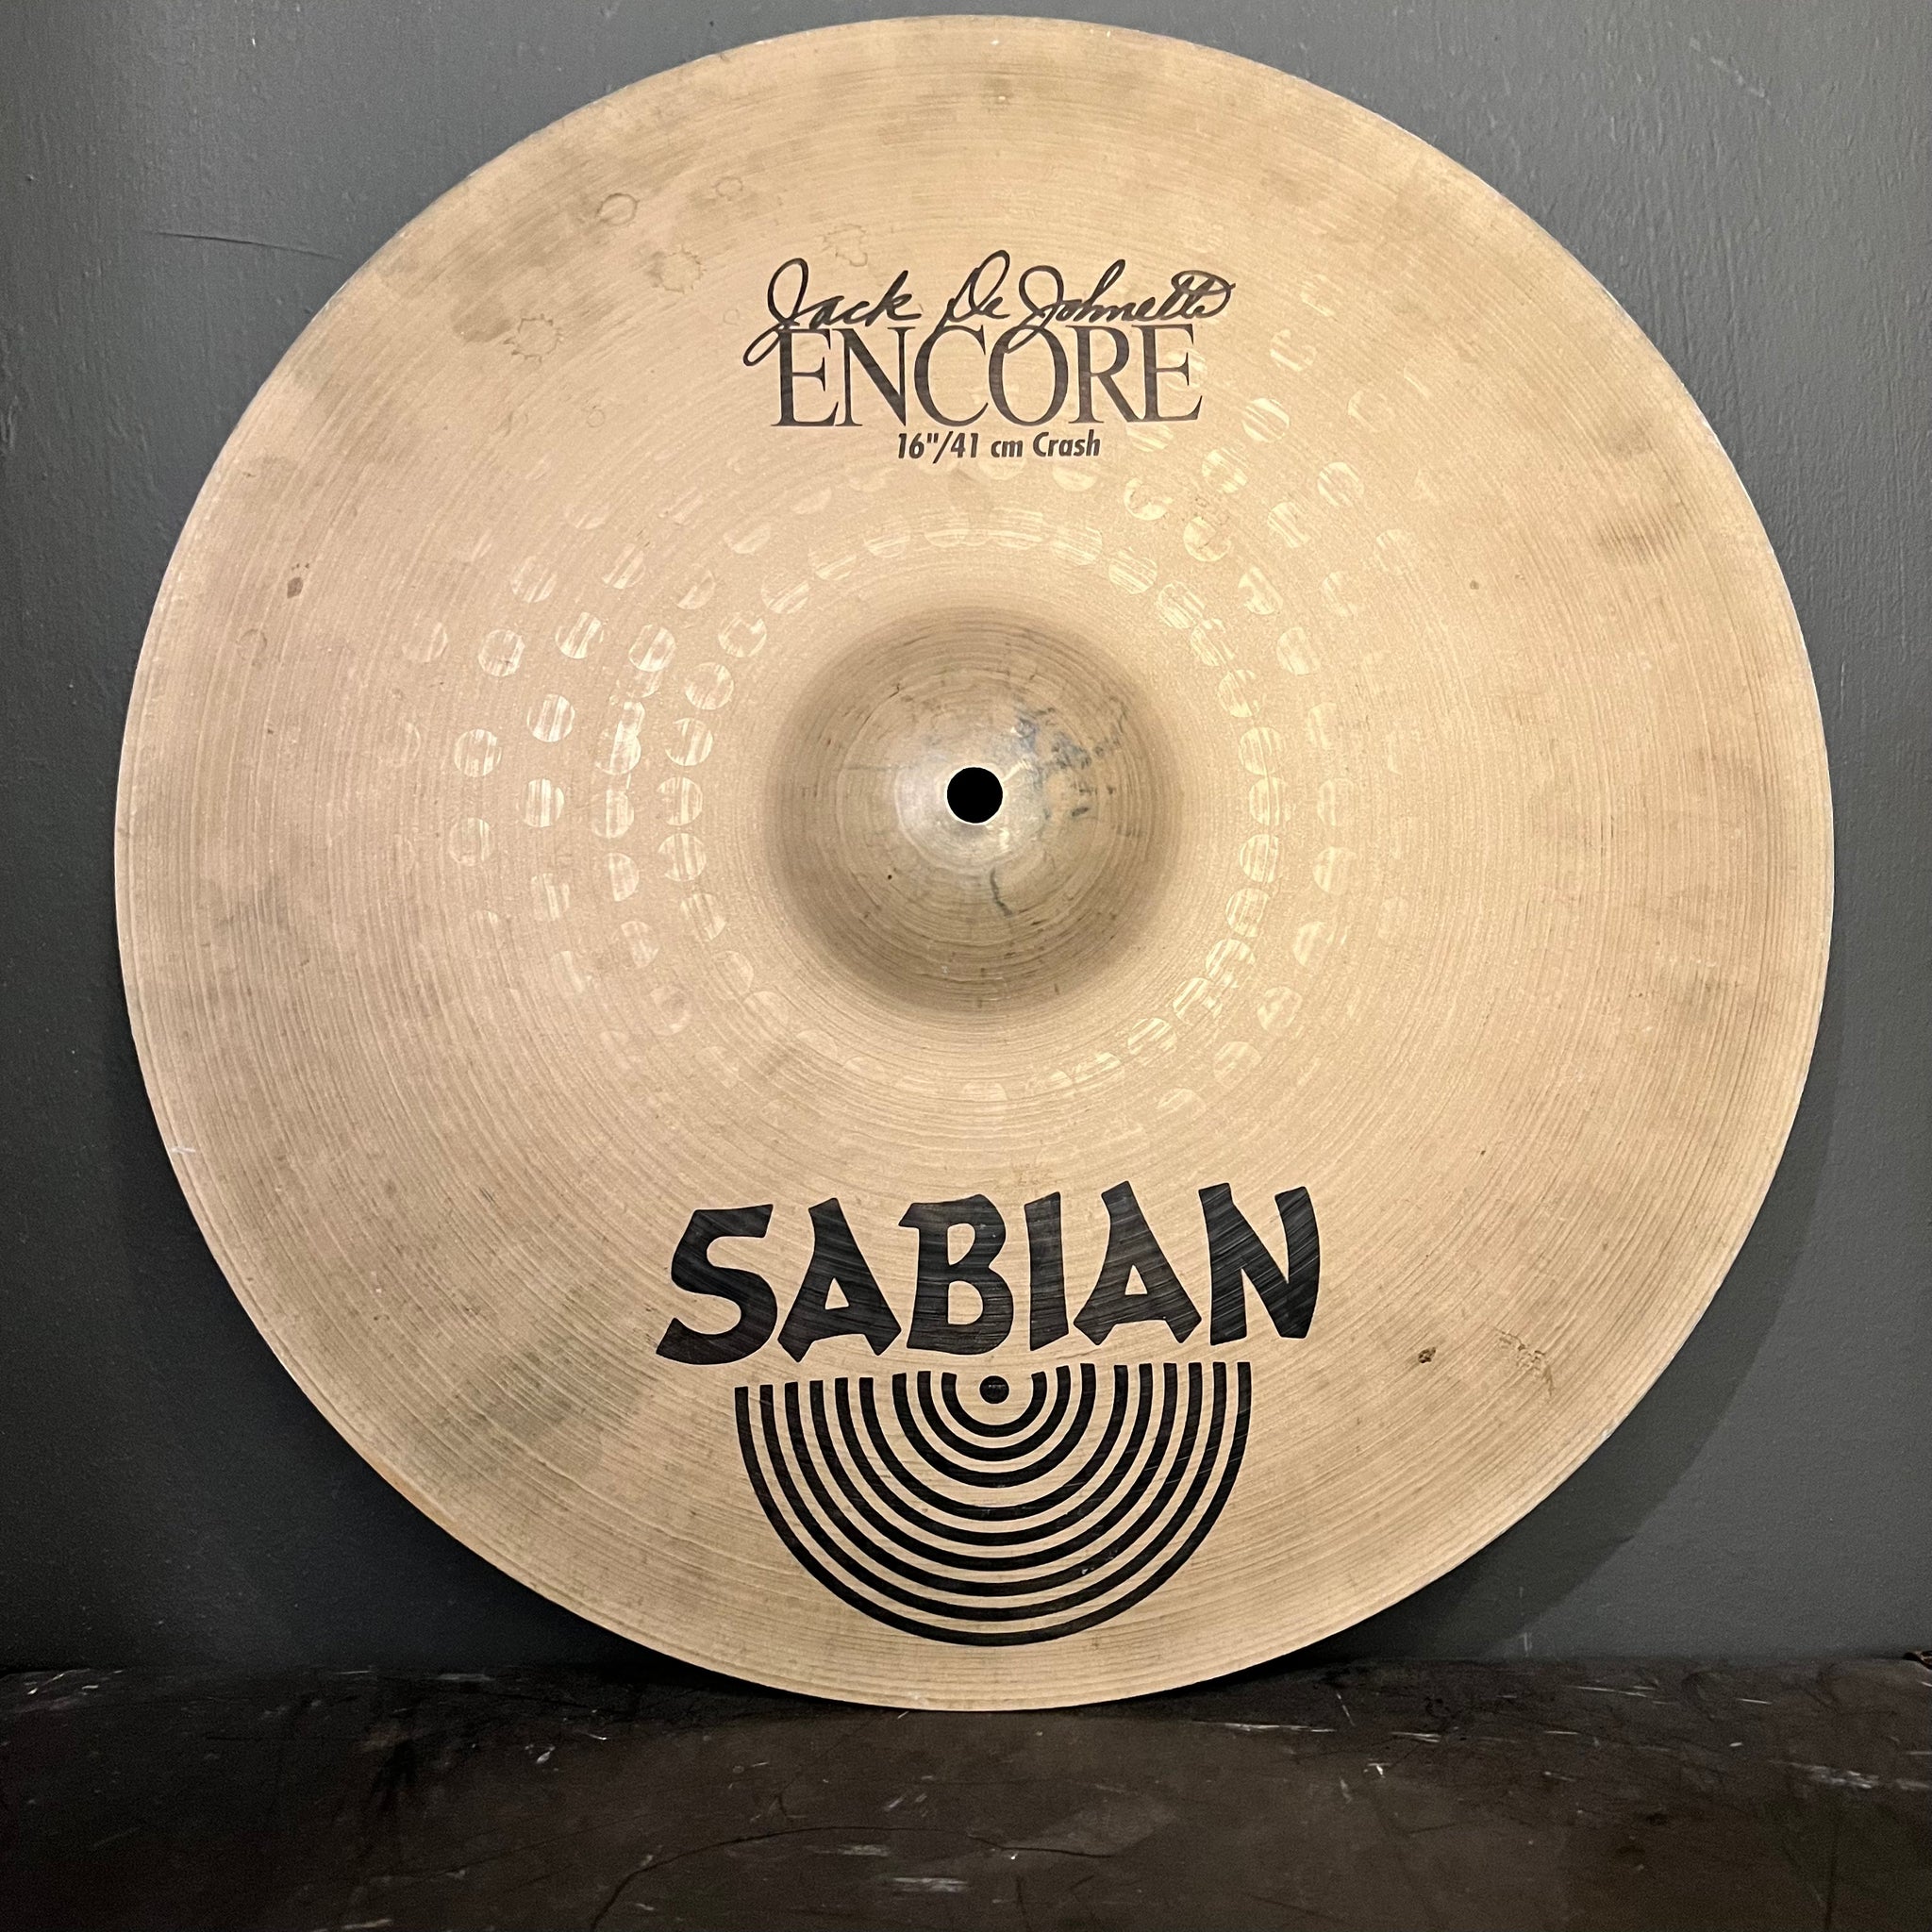 USED Sabian 16" Jack DeJohnette Encore Crash Cymbal - 962g